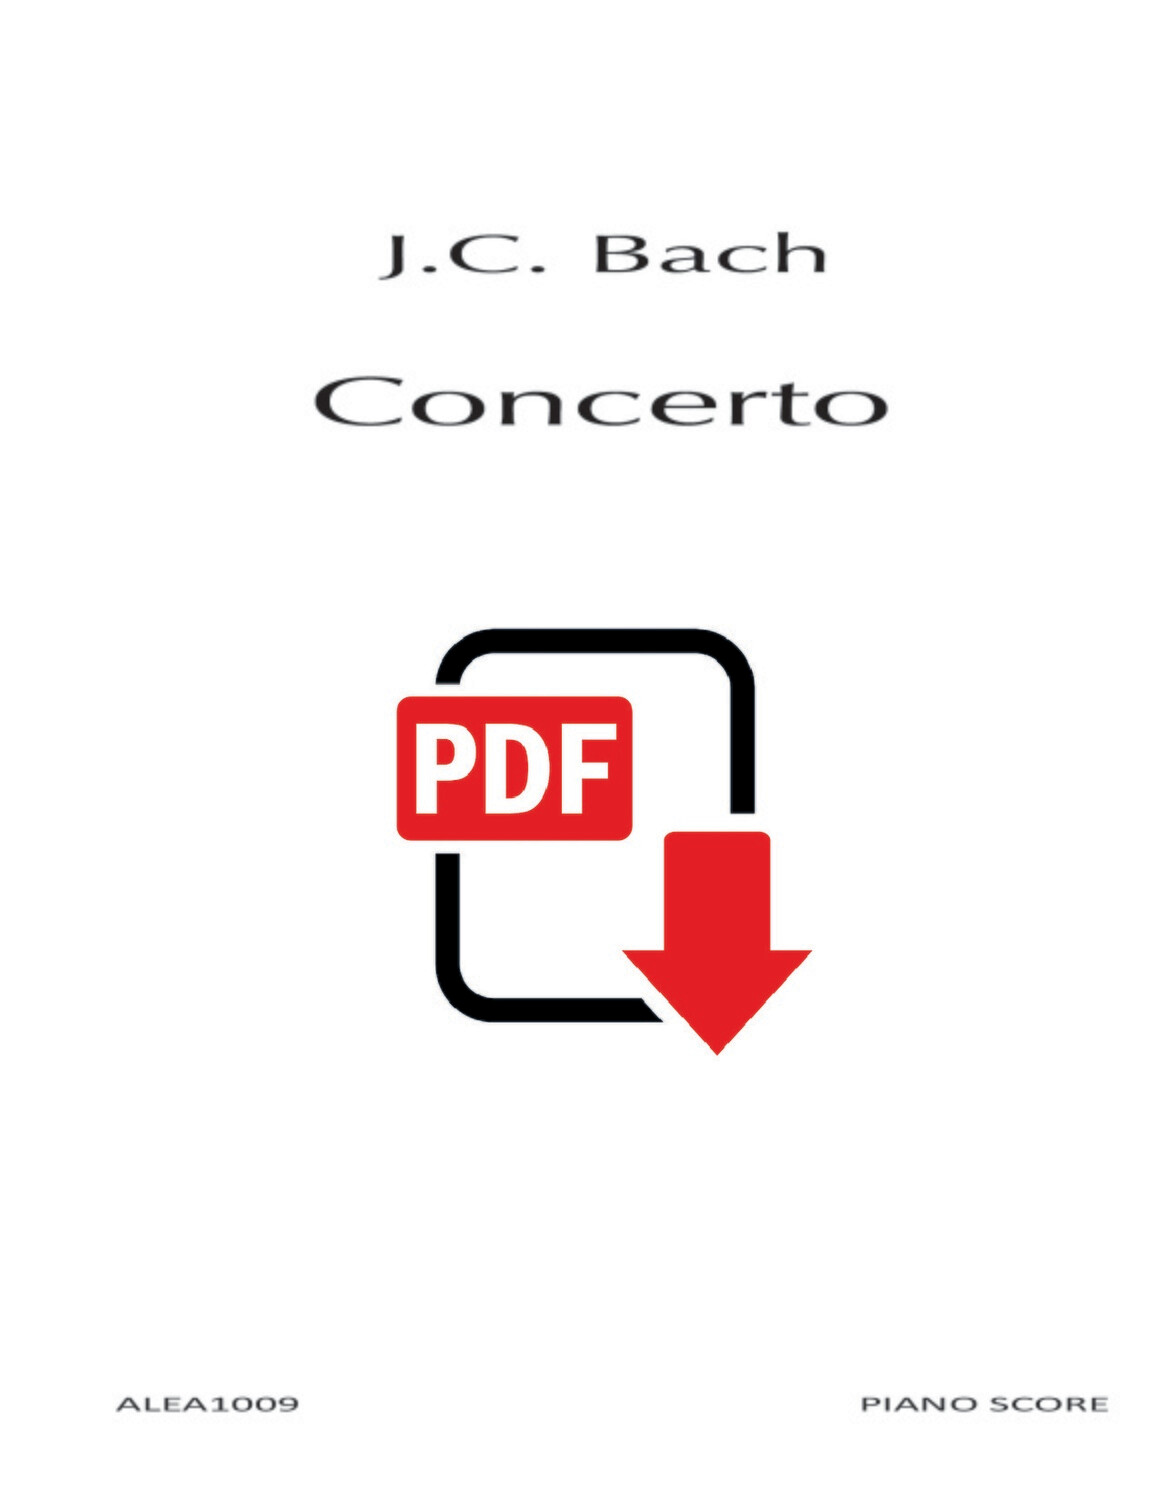 J.C. Bach: Concerto (PDF)